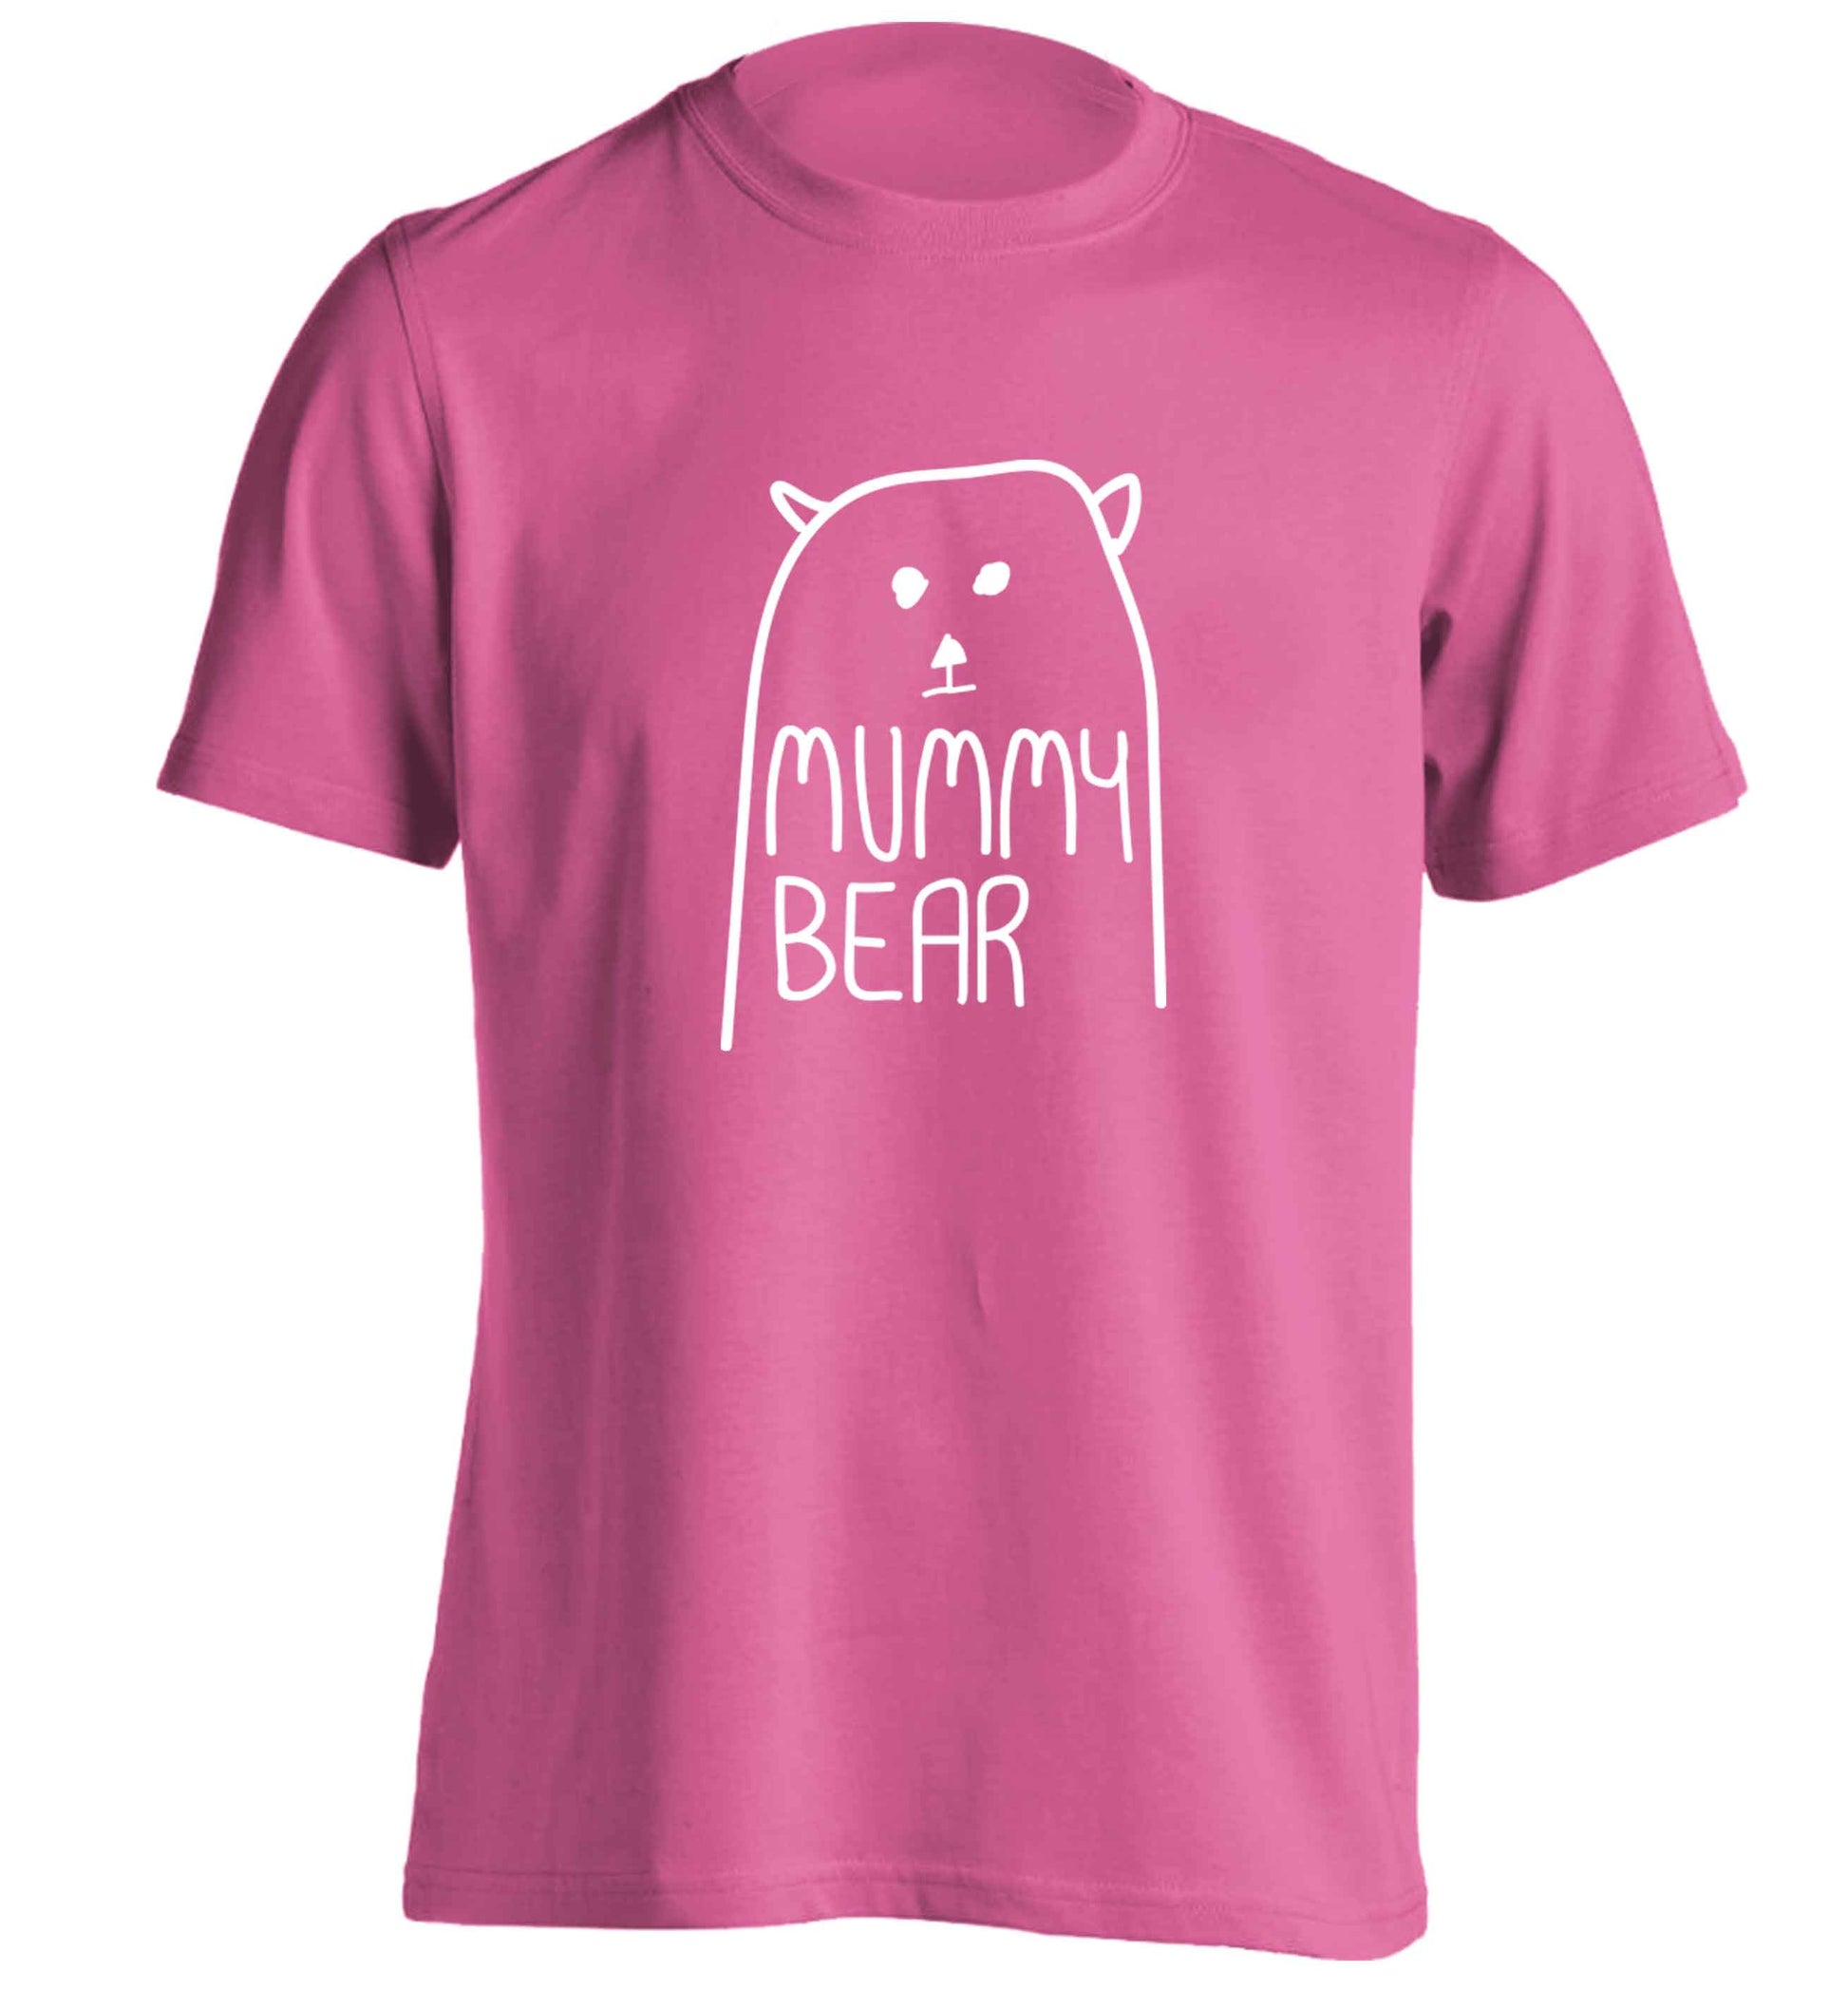 Mummy bear adults unisex pink Tshirt 2XL